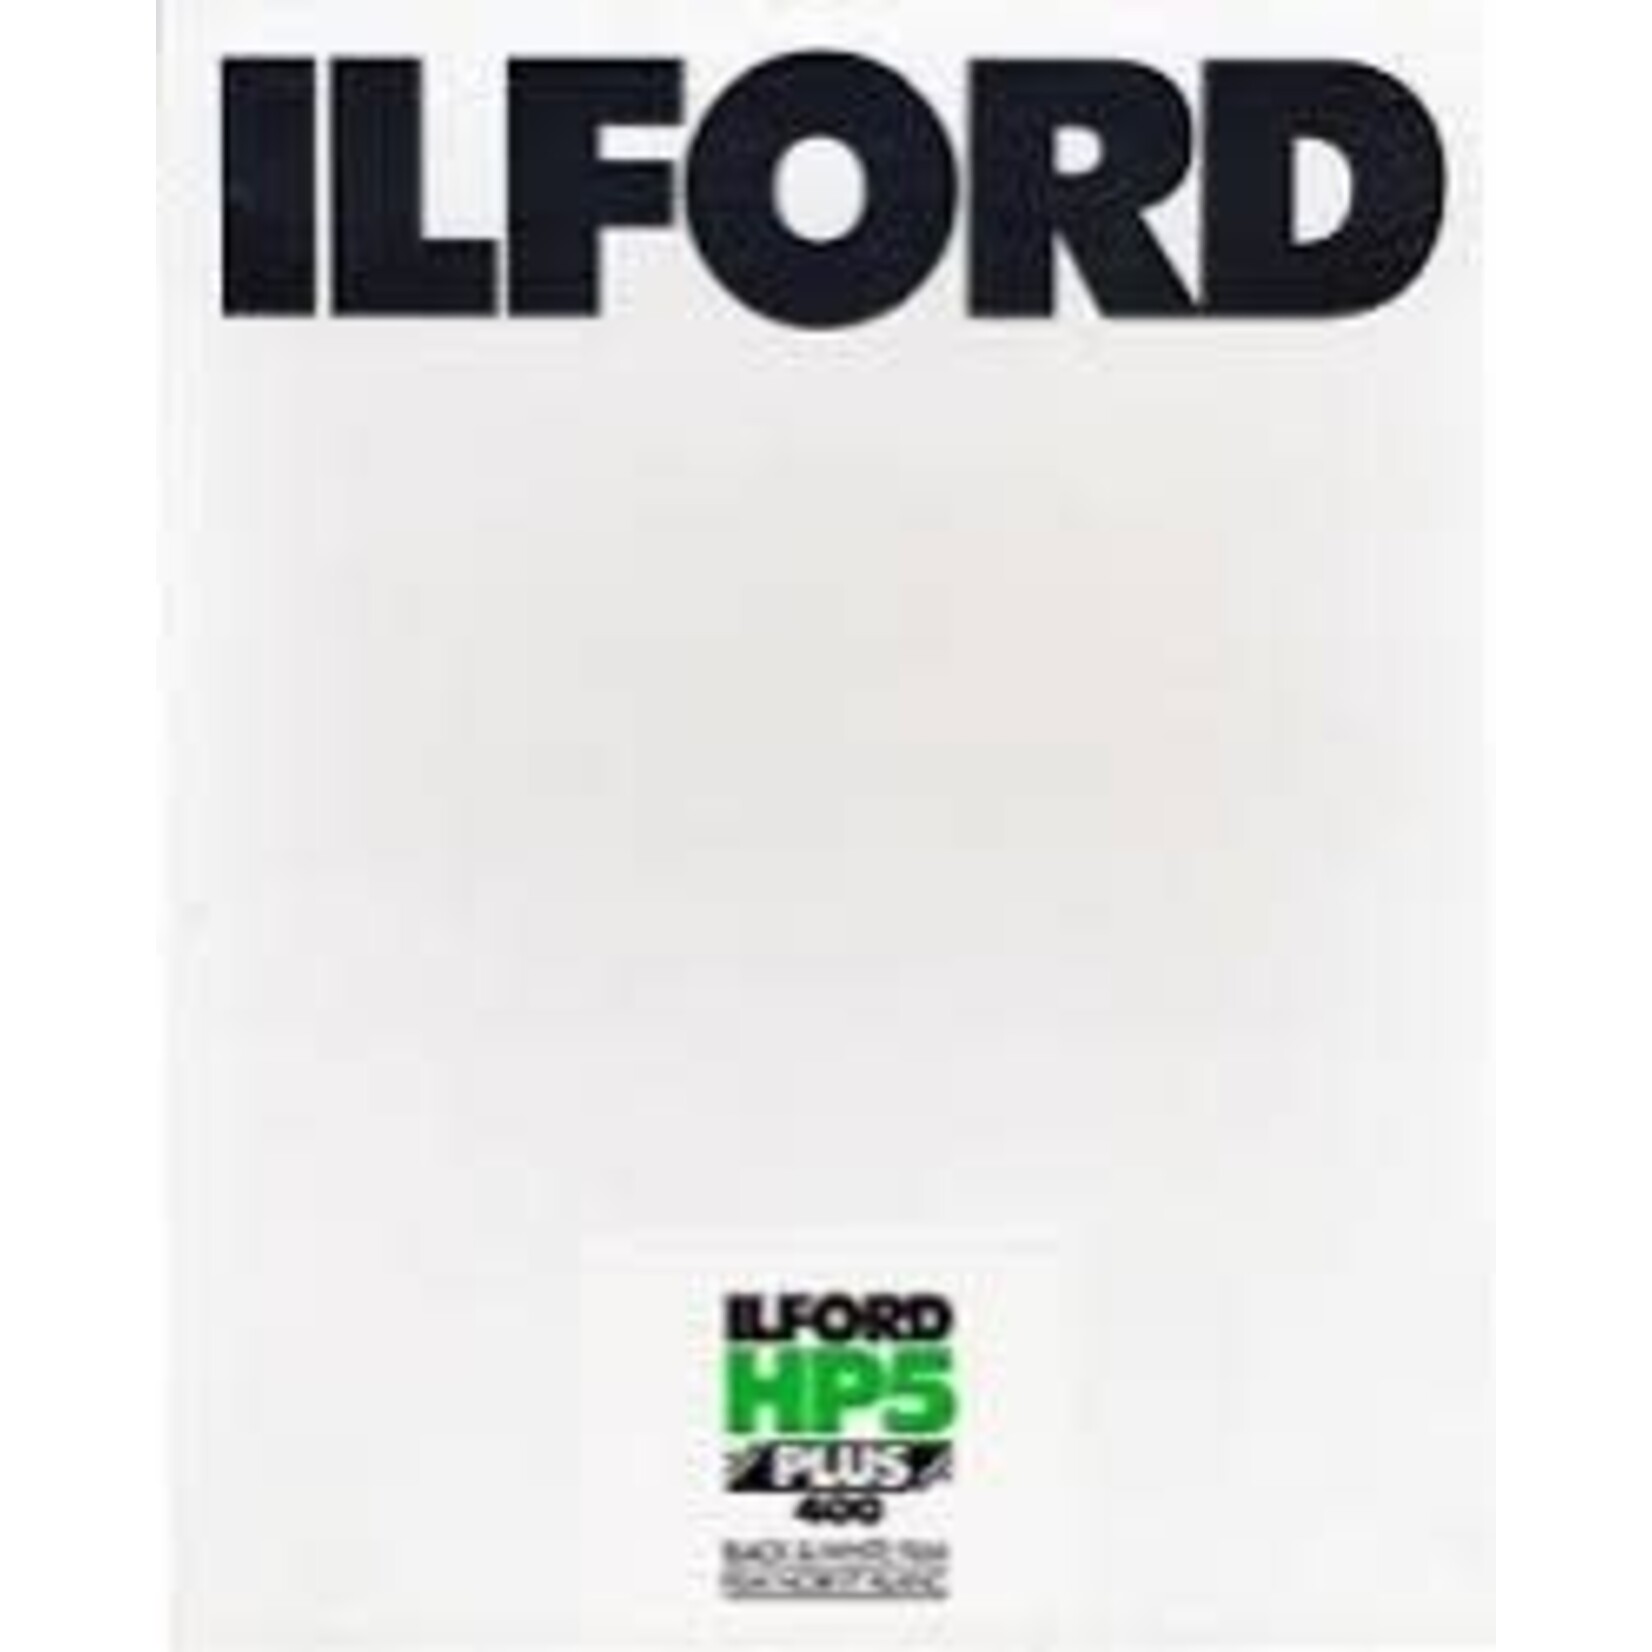 Ilford Ilford FB Matt 8x10 Paper MGFB 25shts